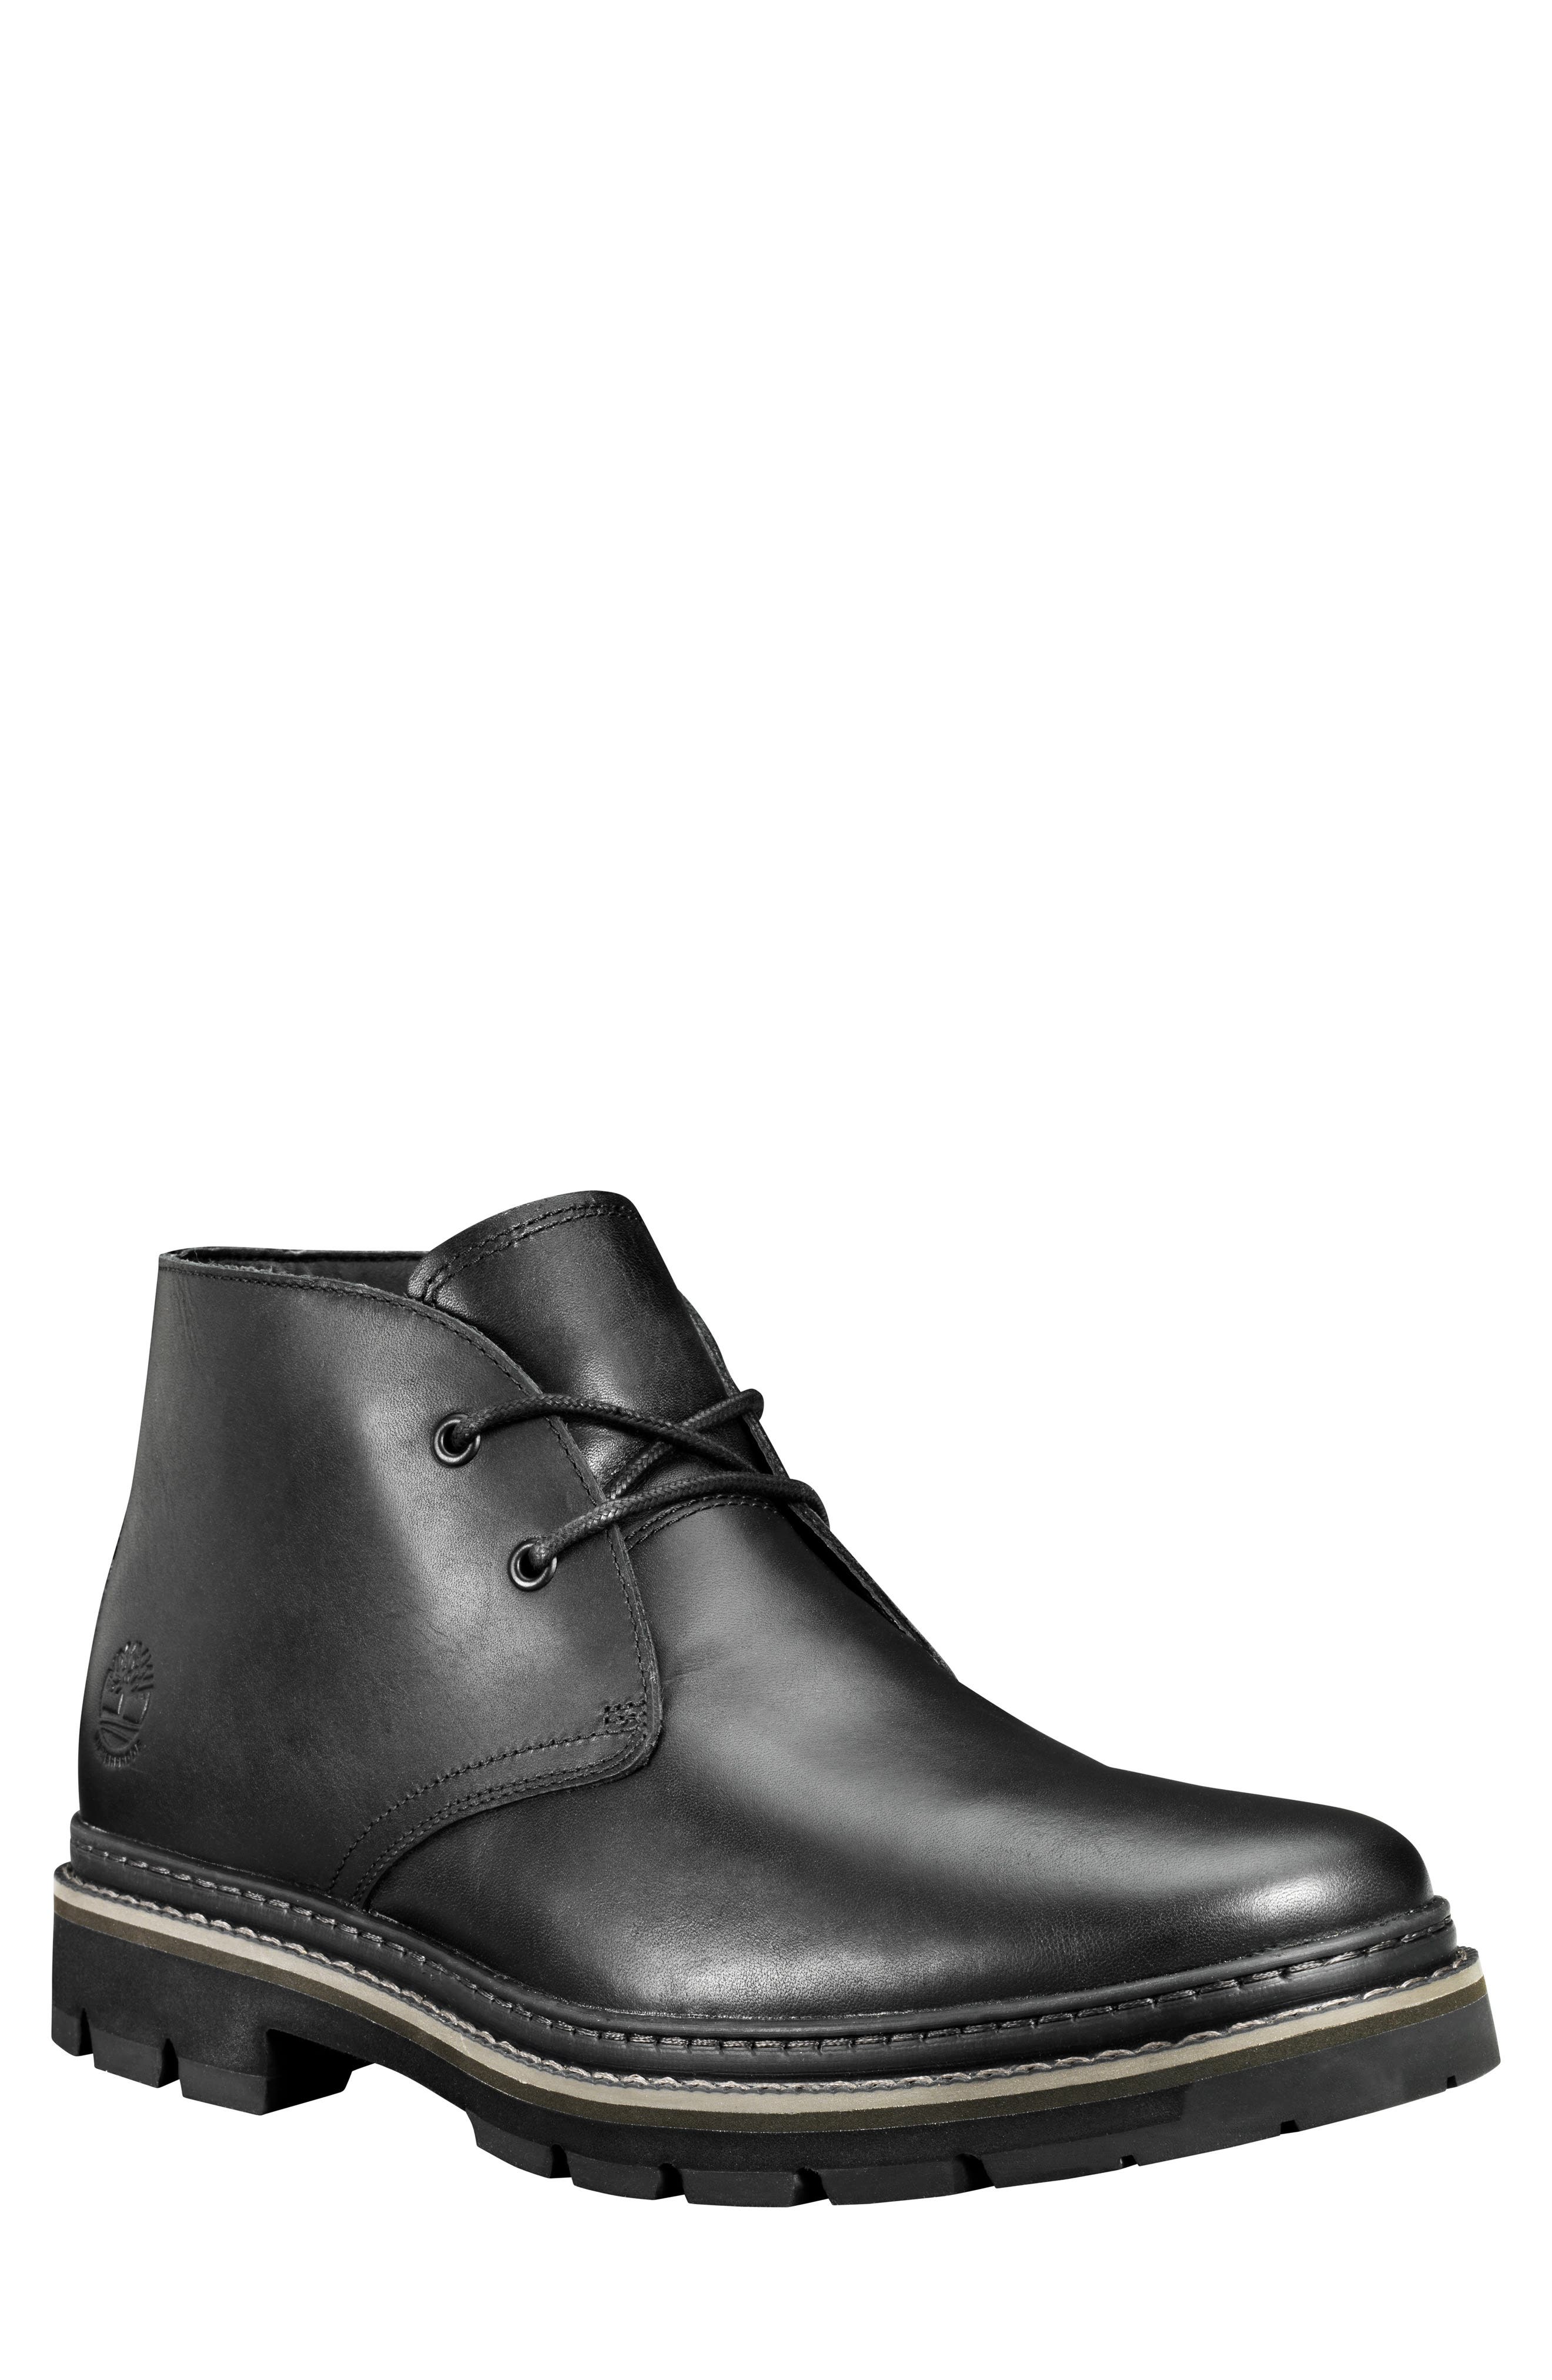 mens black waterproof chukka boots